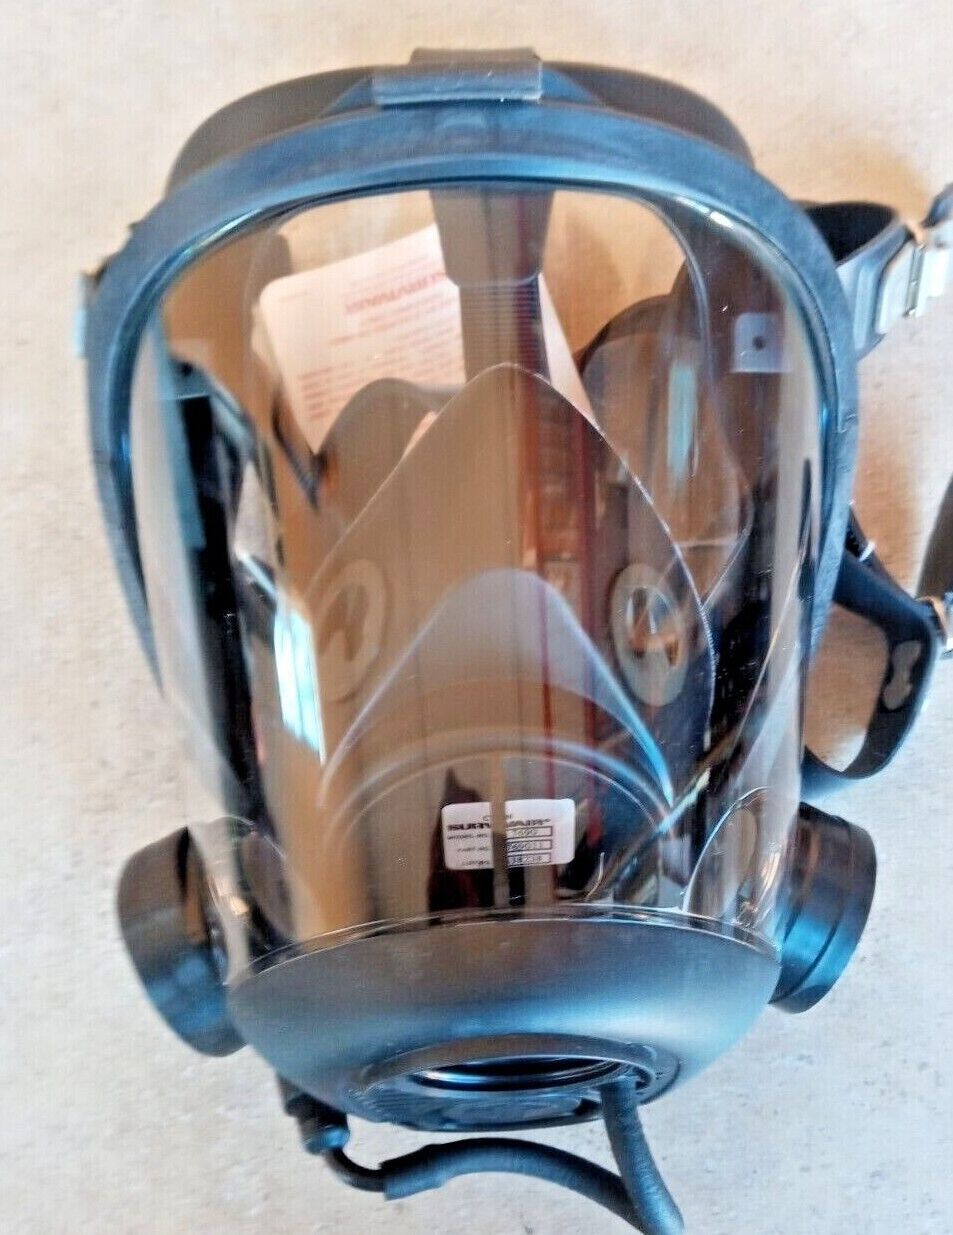 Survivair Opti-Fit CBRN Gas Mask/Respirator New Size Medium Part Number 769020